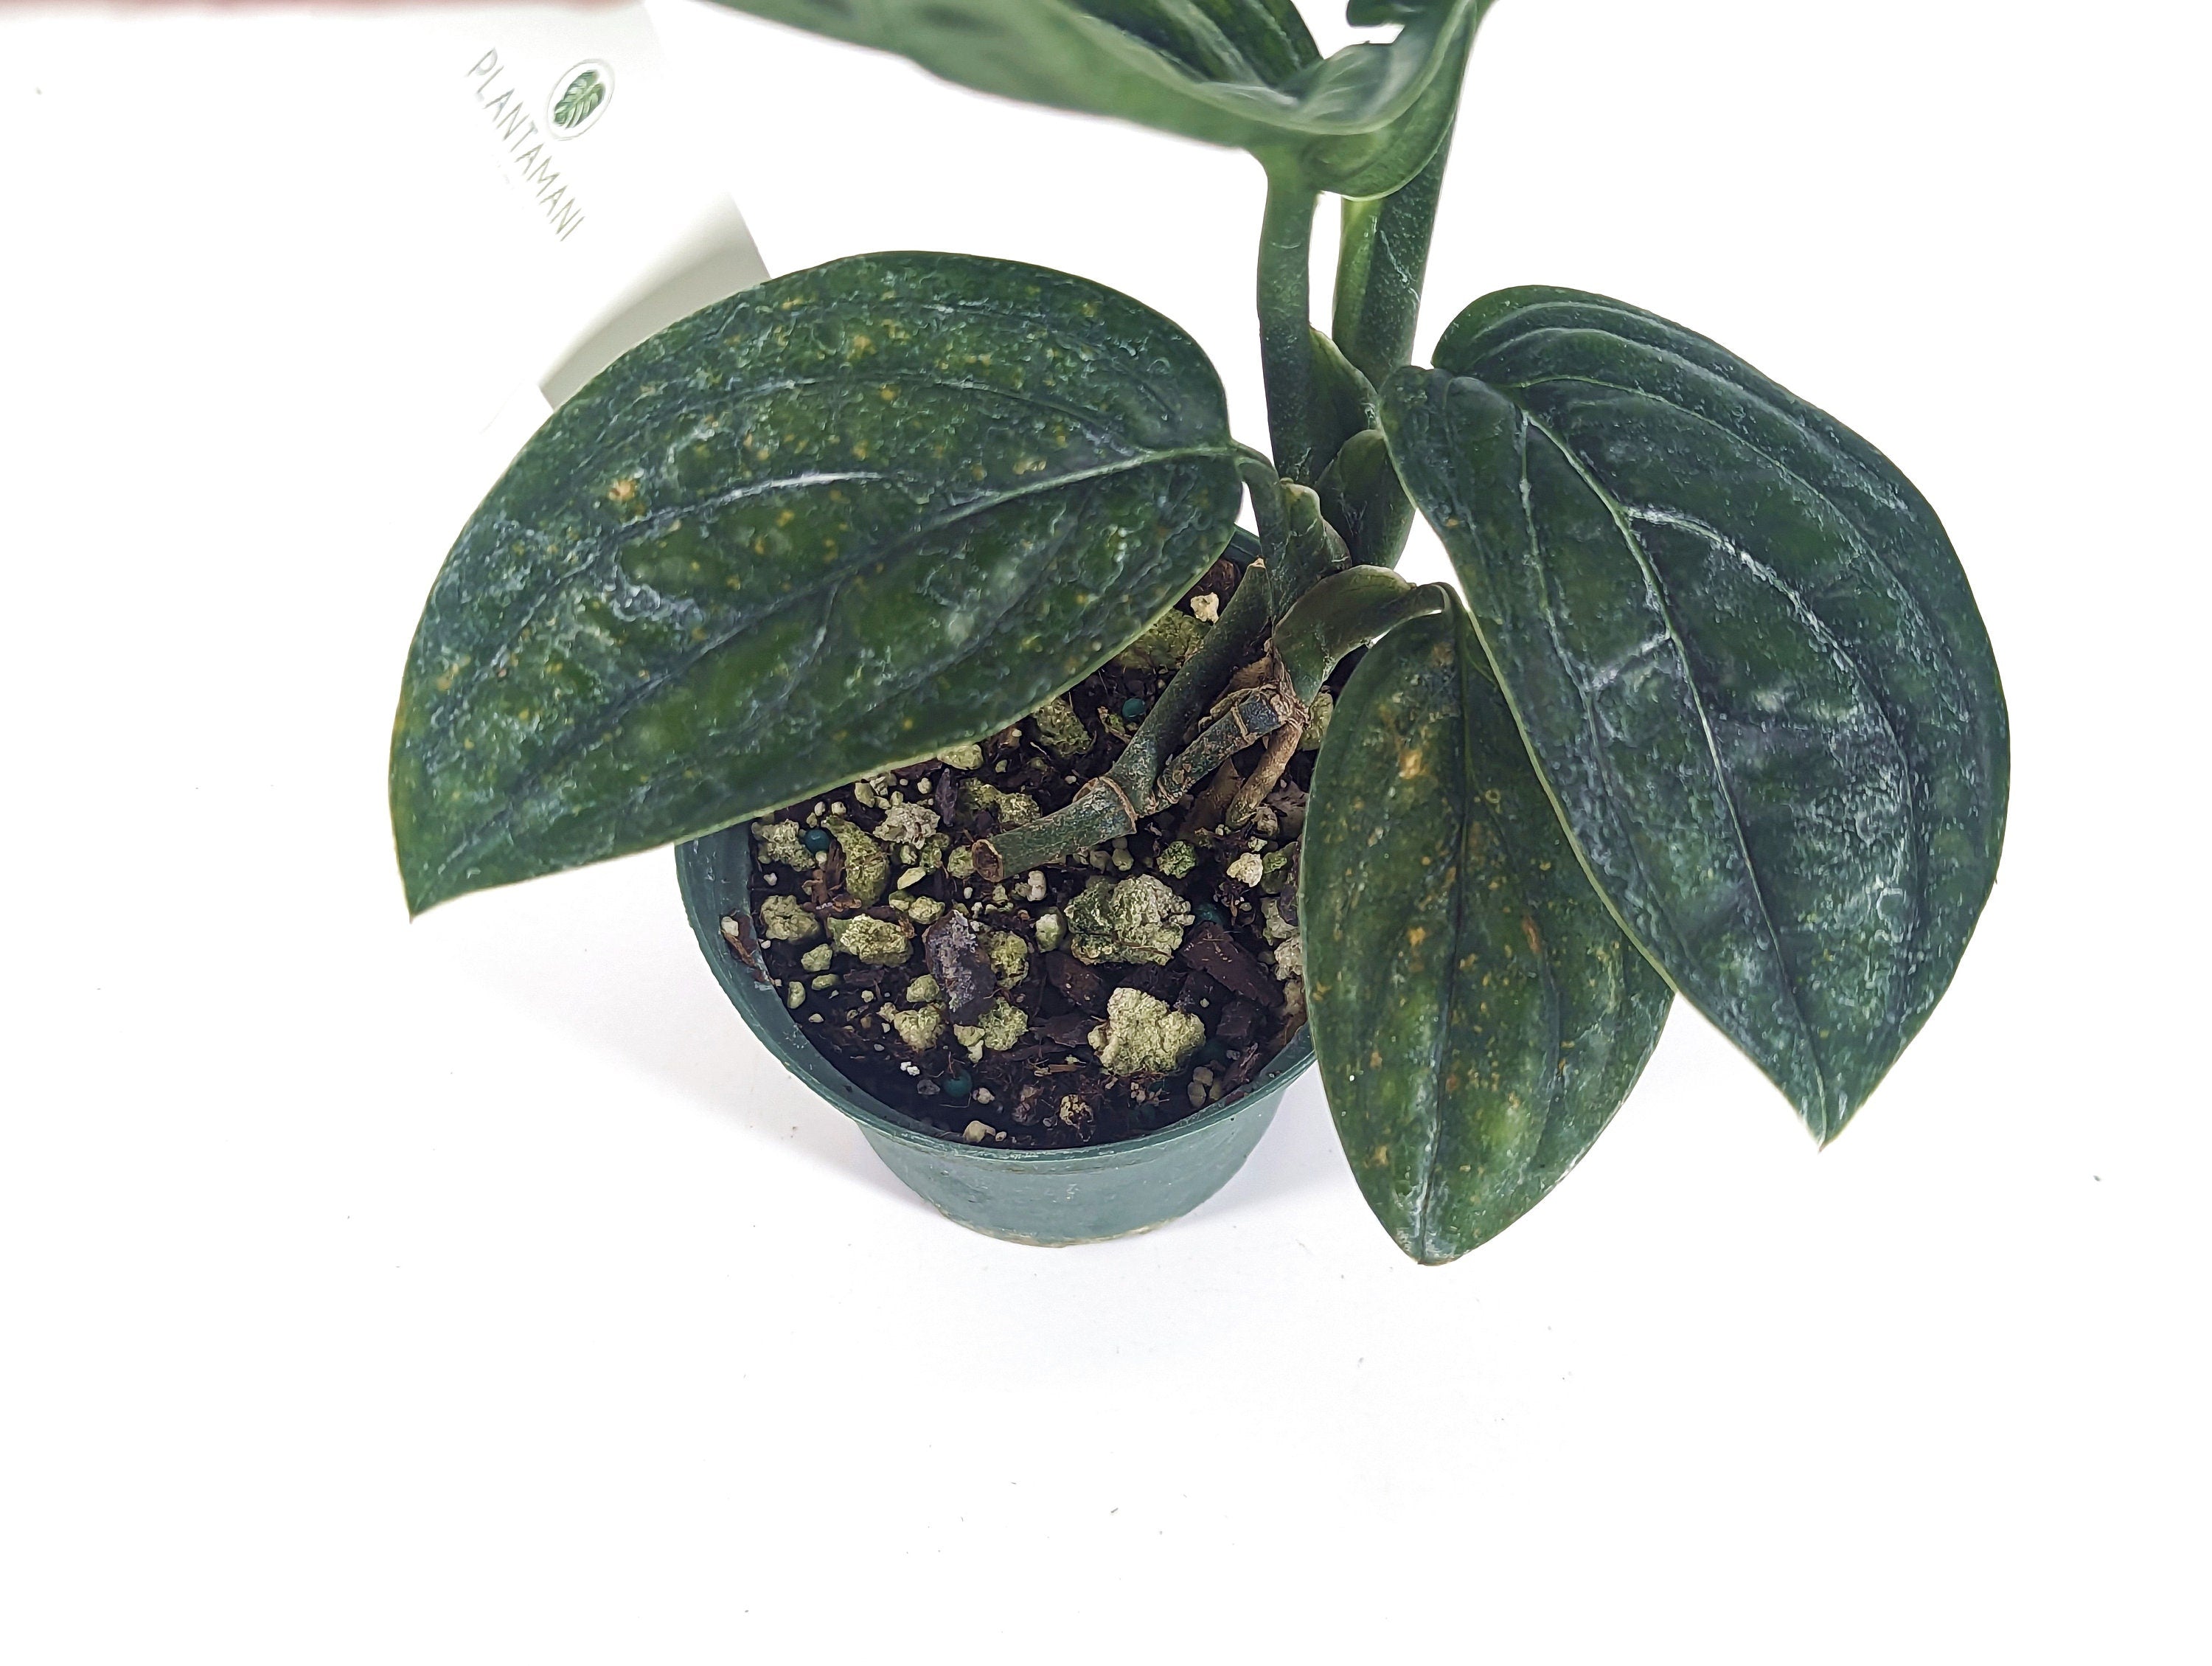 Monstera Peru karstenianum variegated - pick your exact plant in 3 inch pot